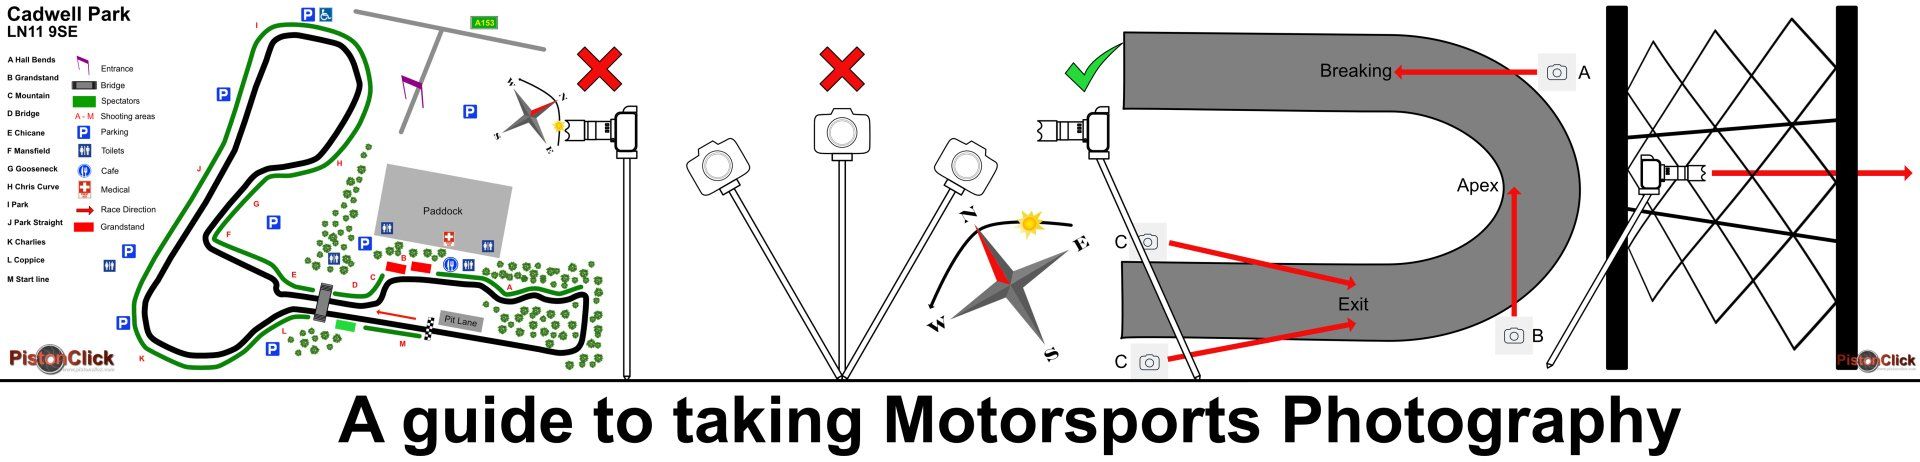 how to take motorsport photos